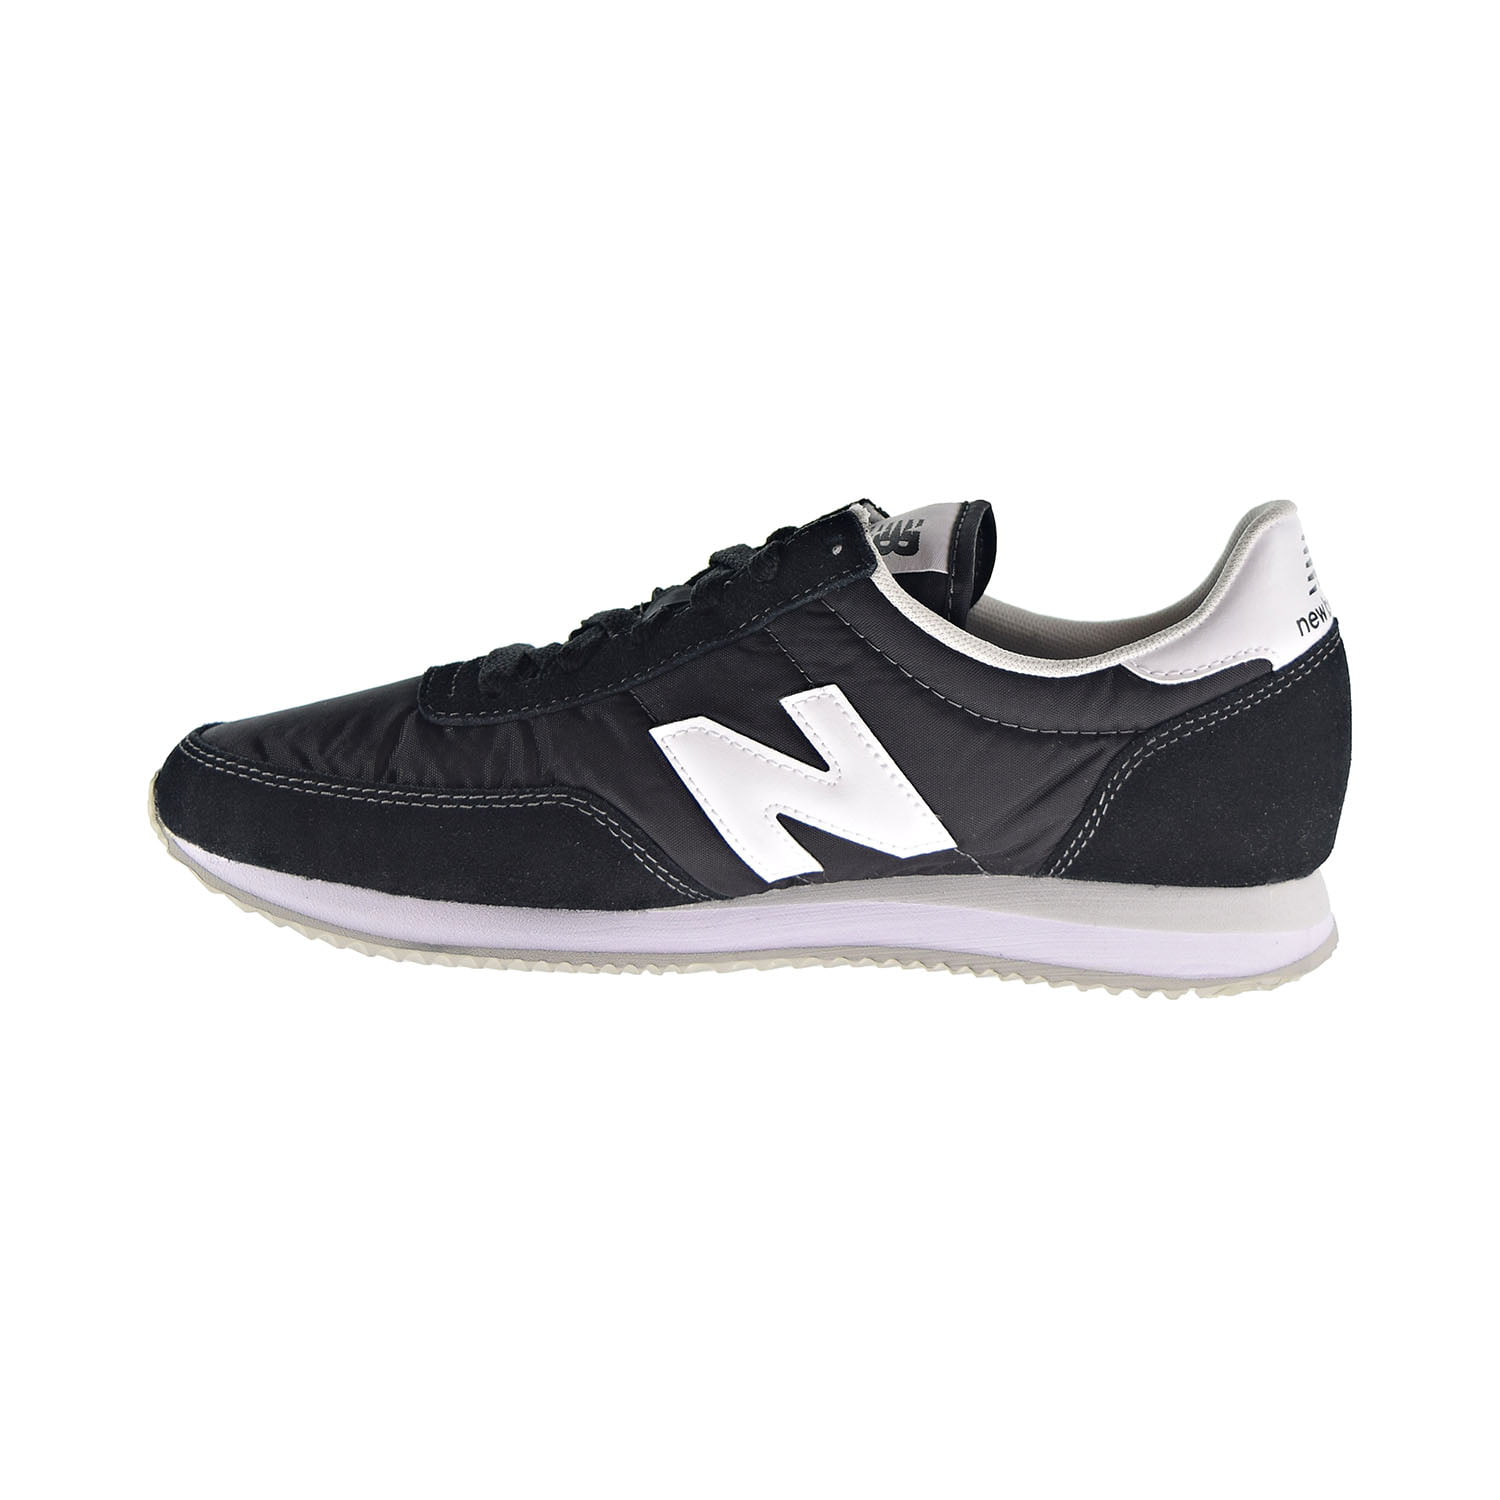 New Balance Classics 720 V1 Men's Shoes Black/White ul720-aa